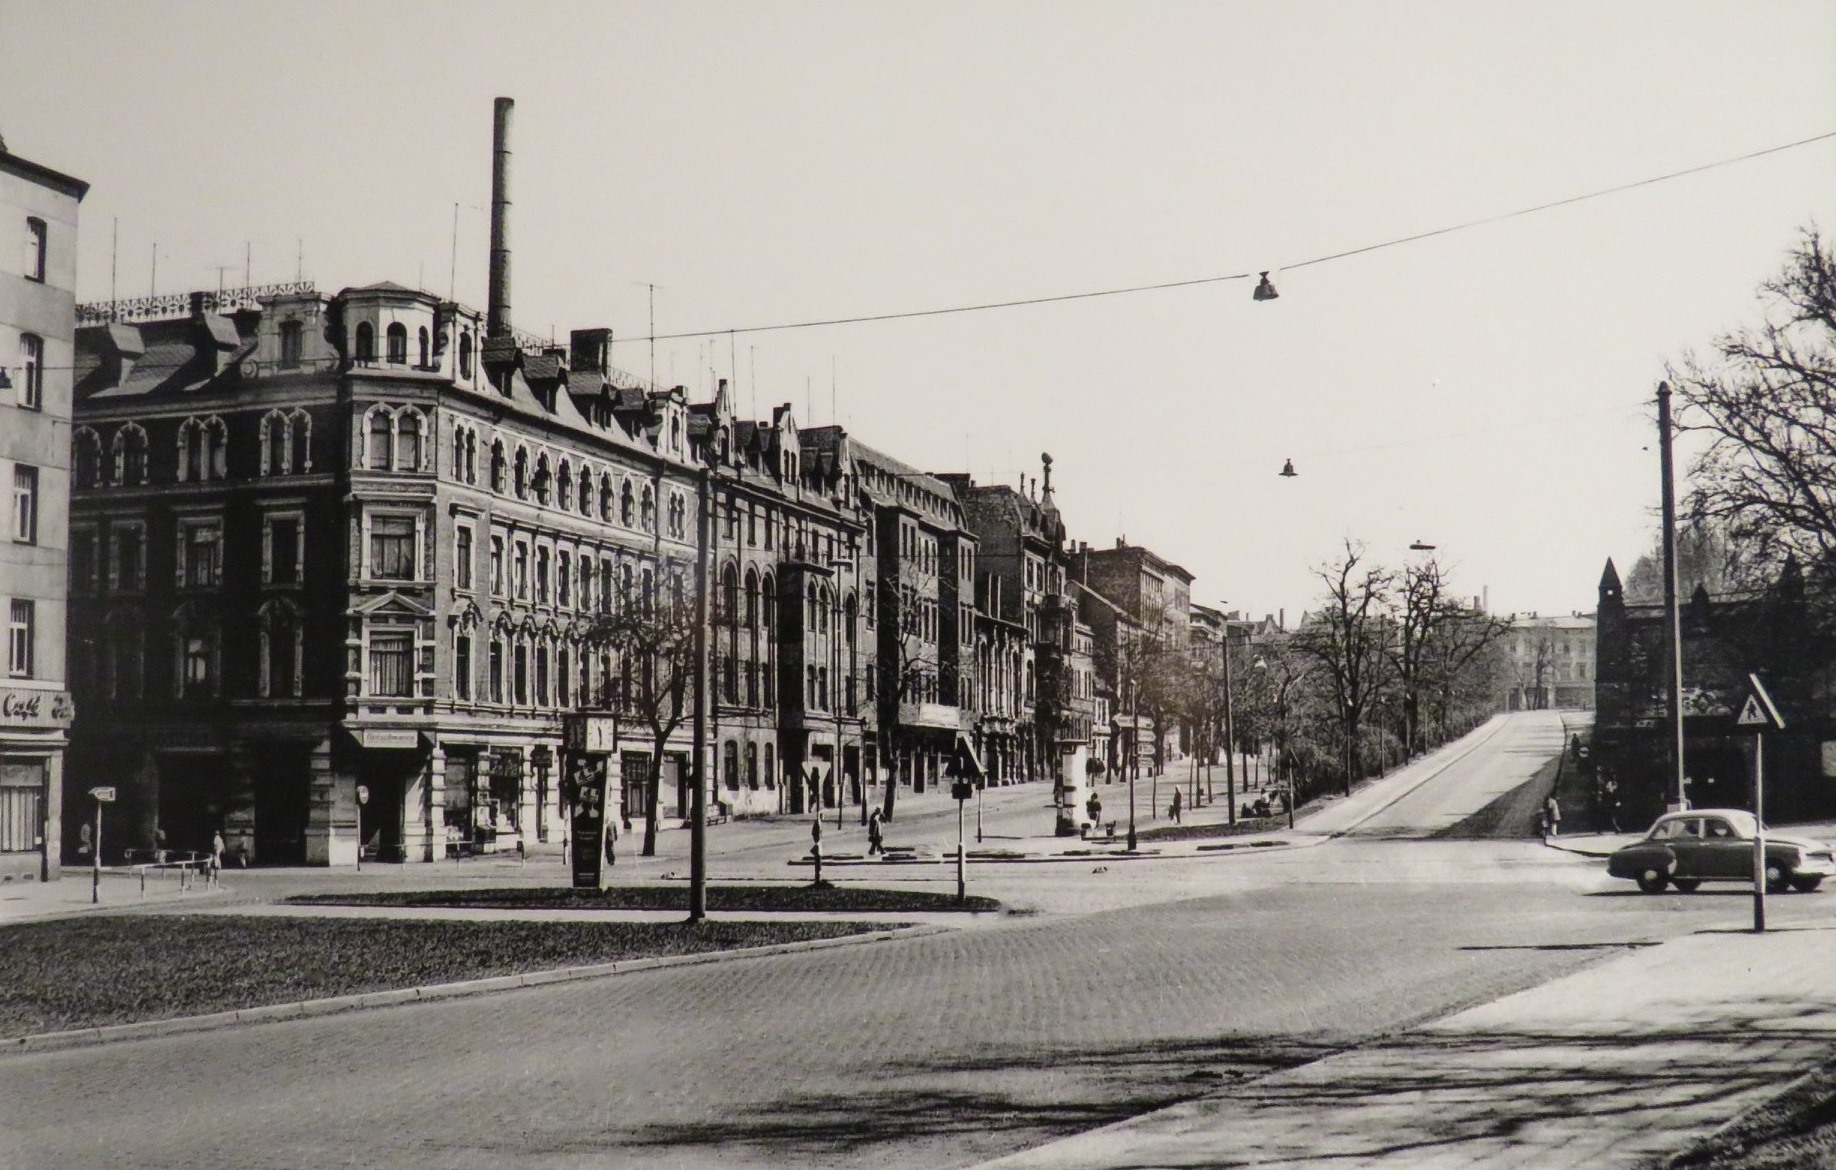 halle-saale/Franckeplatz 1964.jpg